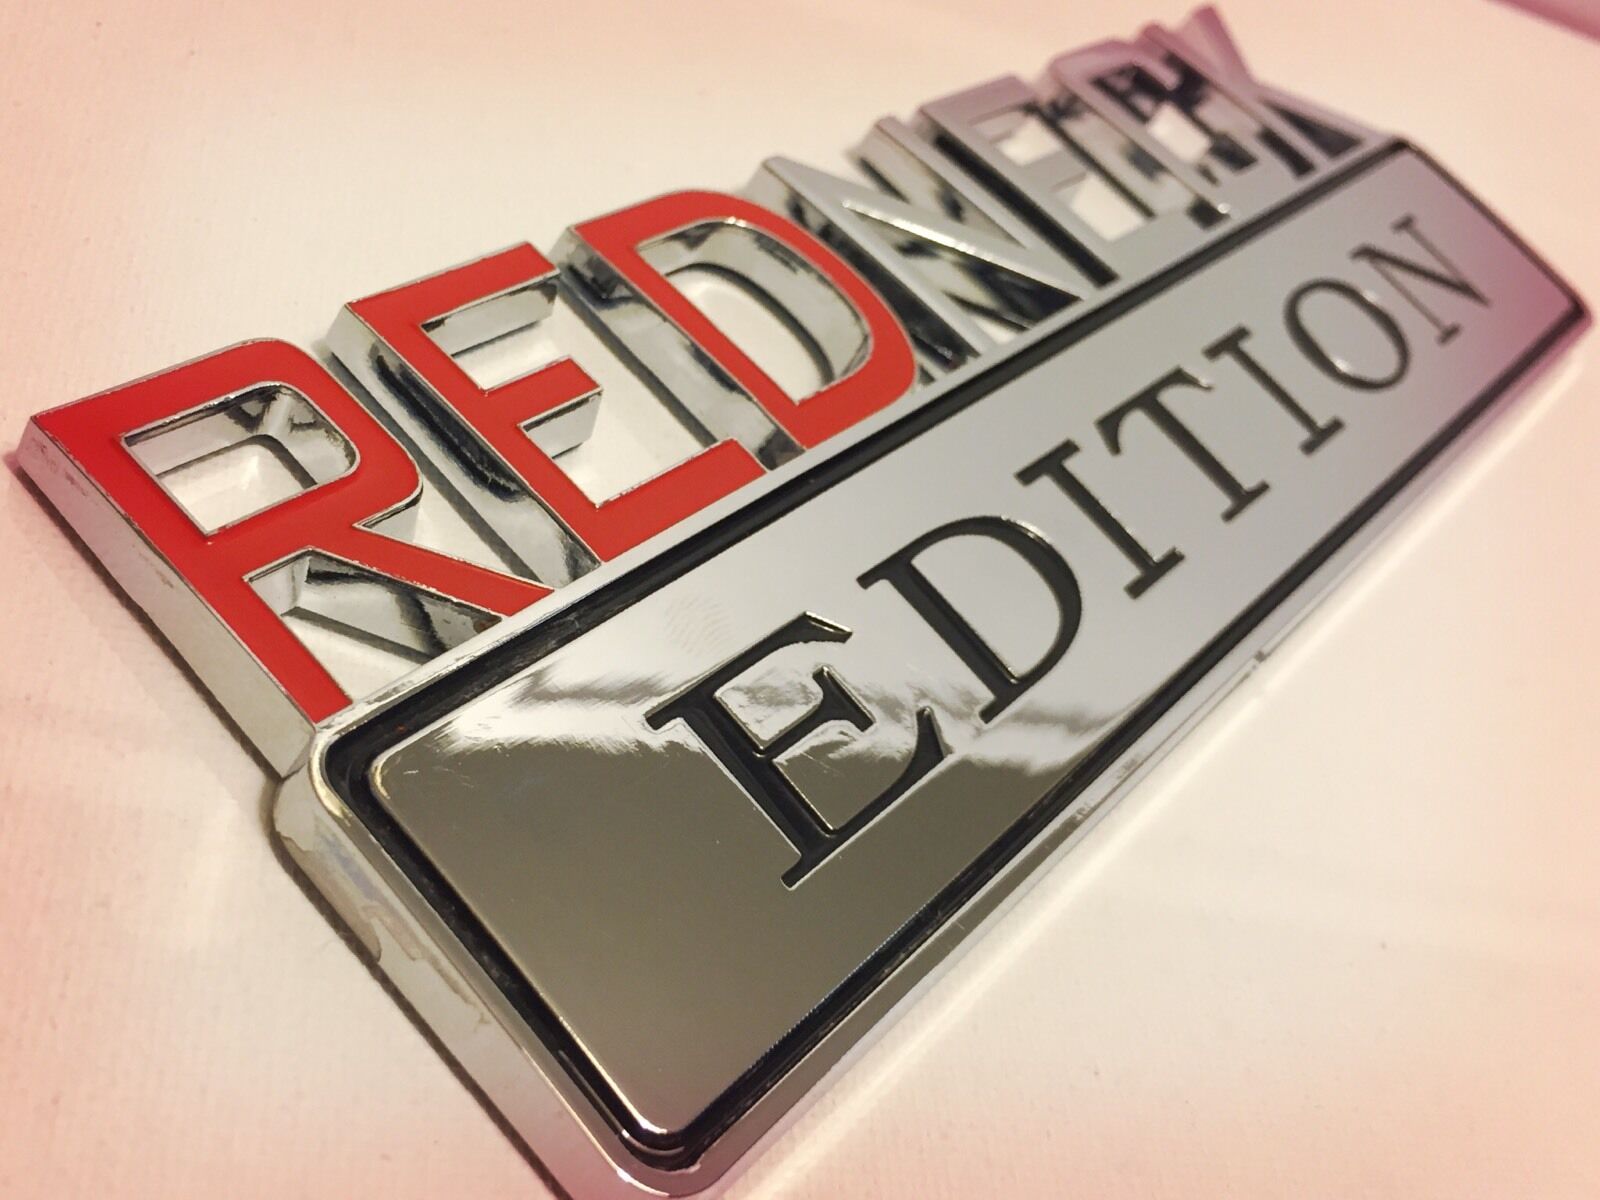 1000% REDNECK EDITION EMBLEM lift gate 3D CAR TRUCK LOGO DECAL SIGN RED NECK 01